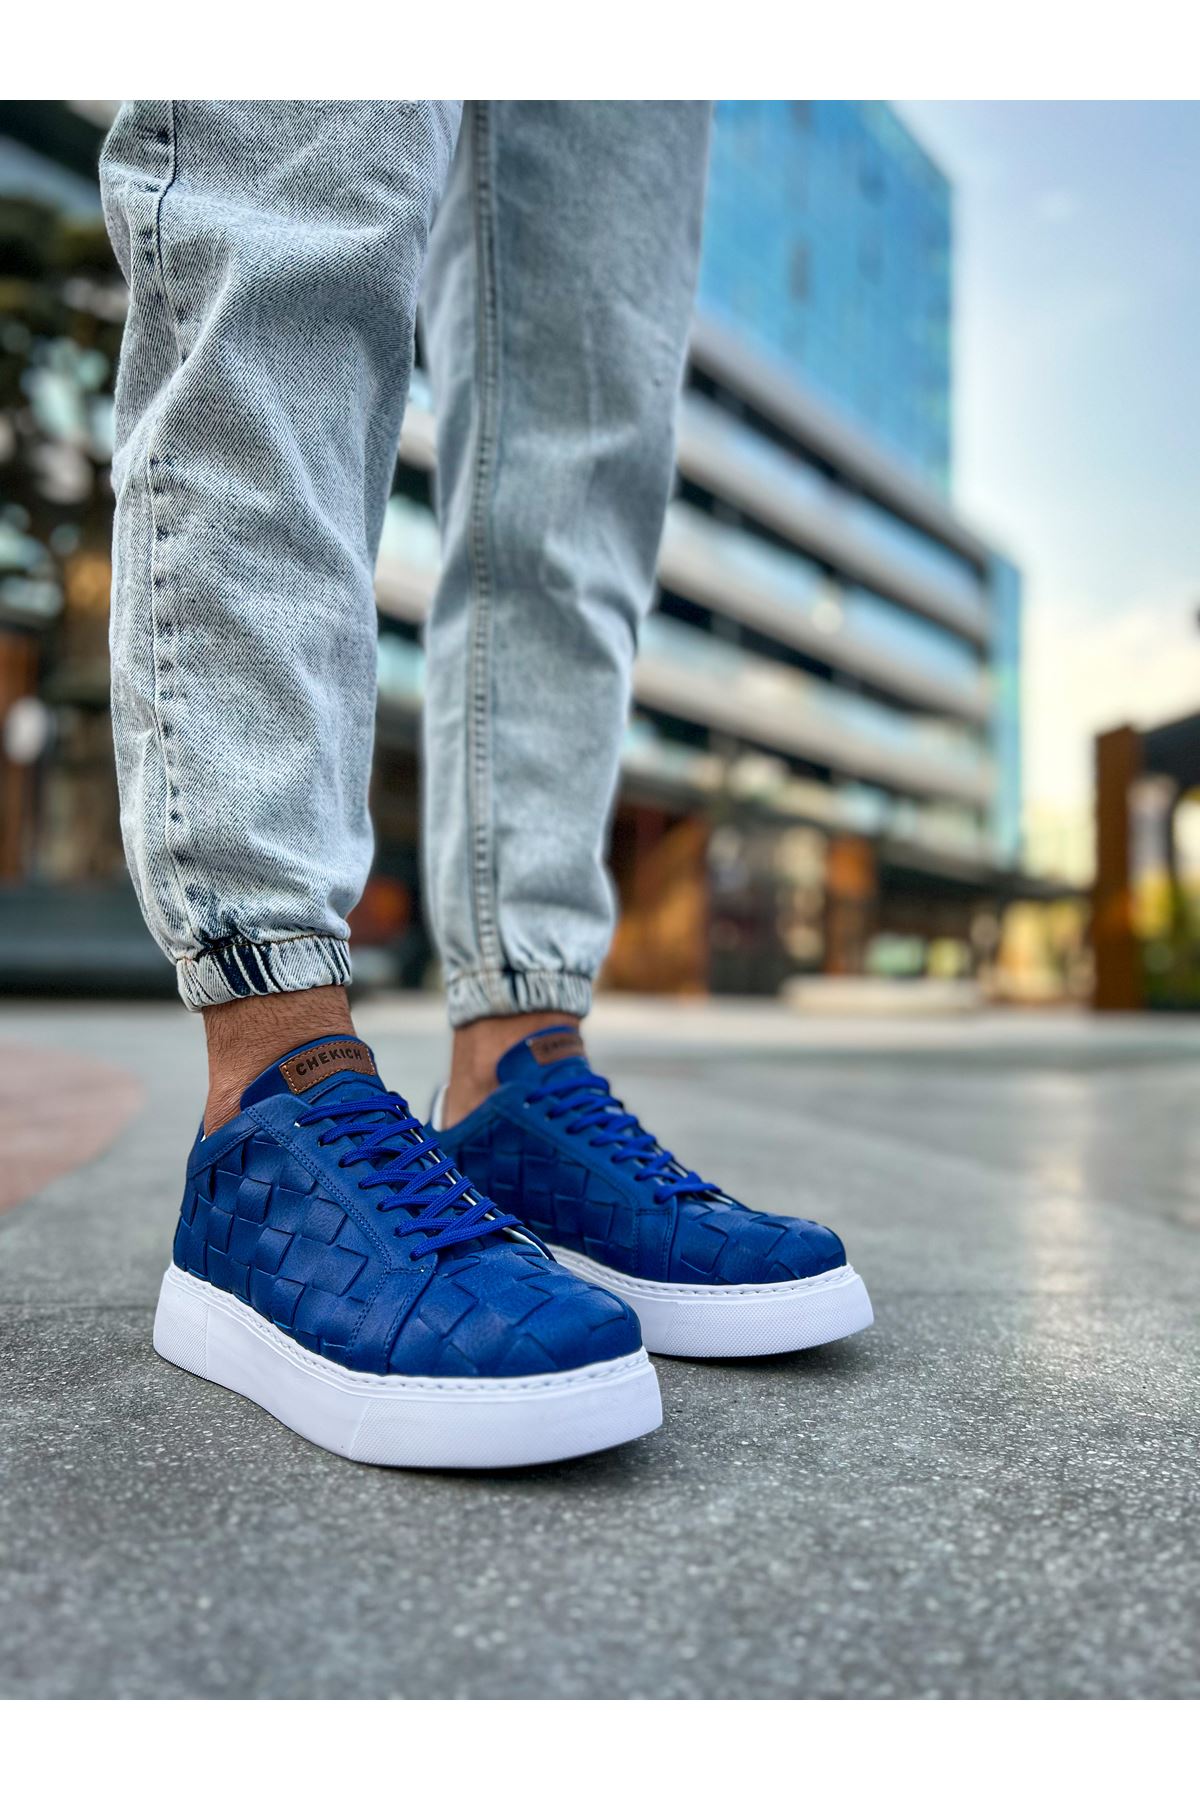 CH209 OBT Vimini Men's Shoes sneakers BLUE - STREETMODE ™